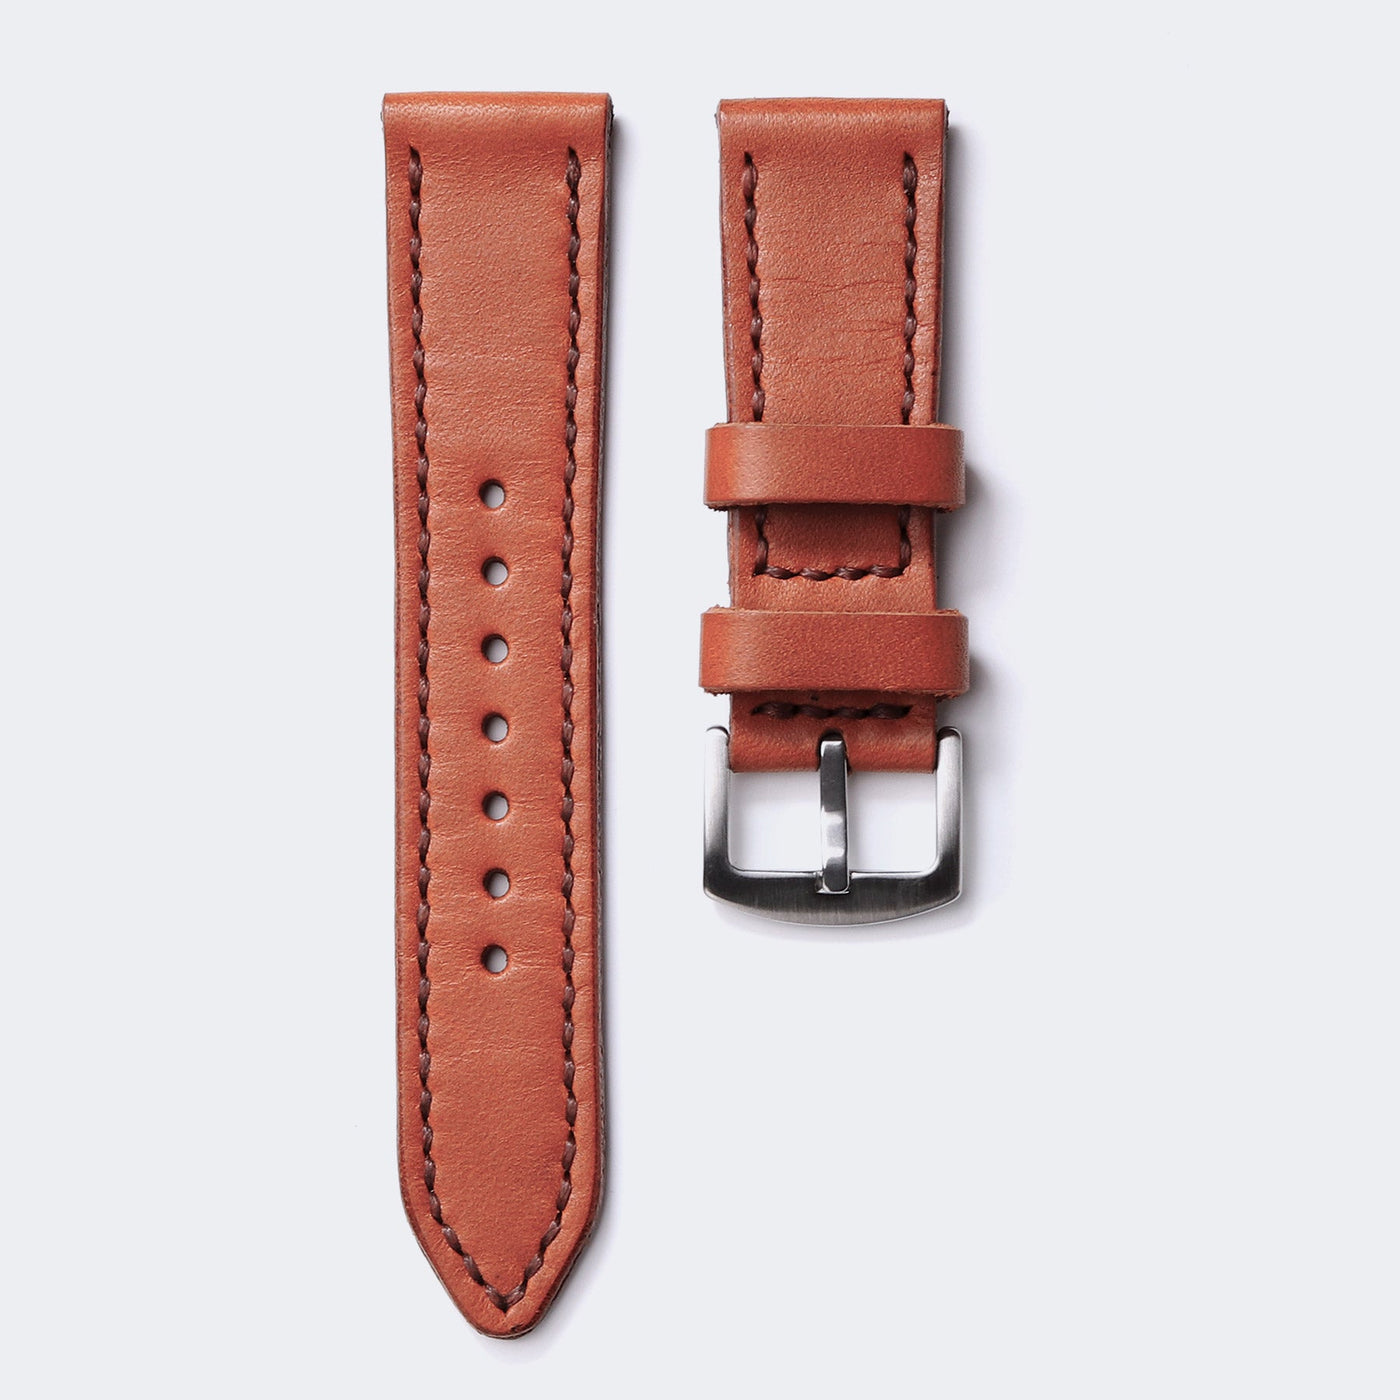 Custom Made Leather Watch Strap - Cognac